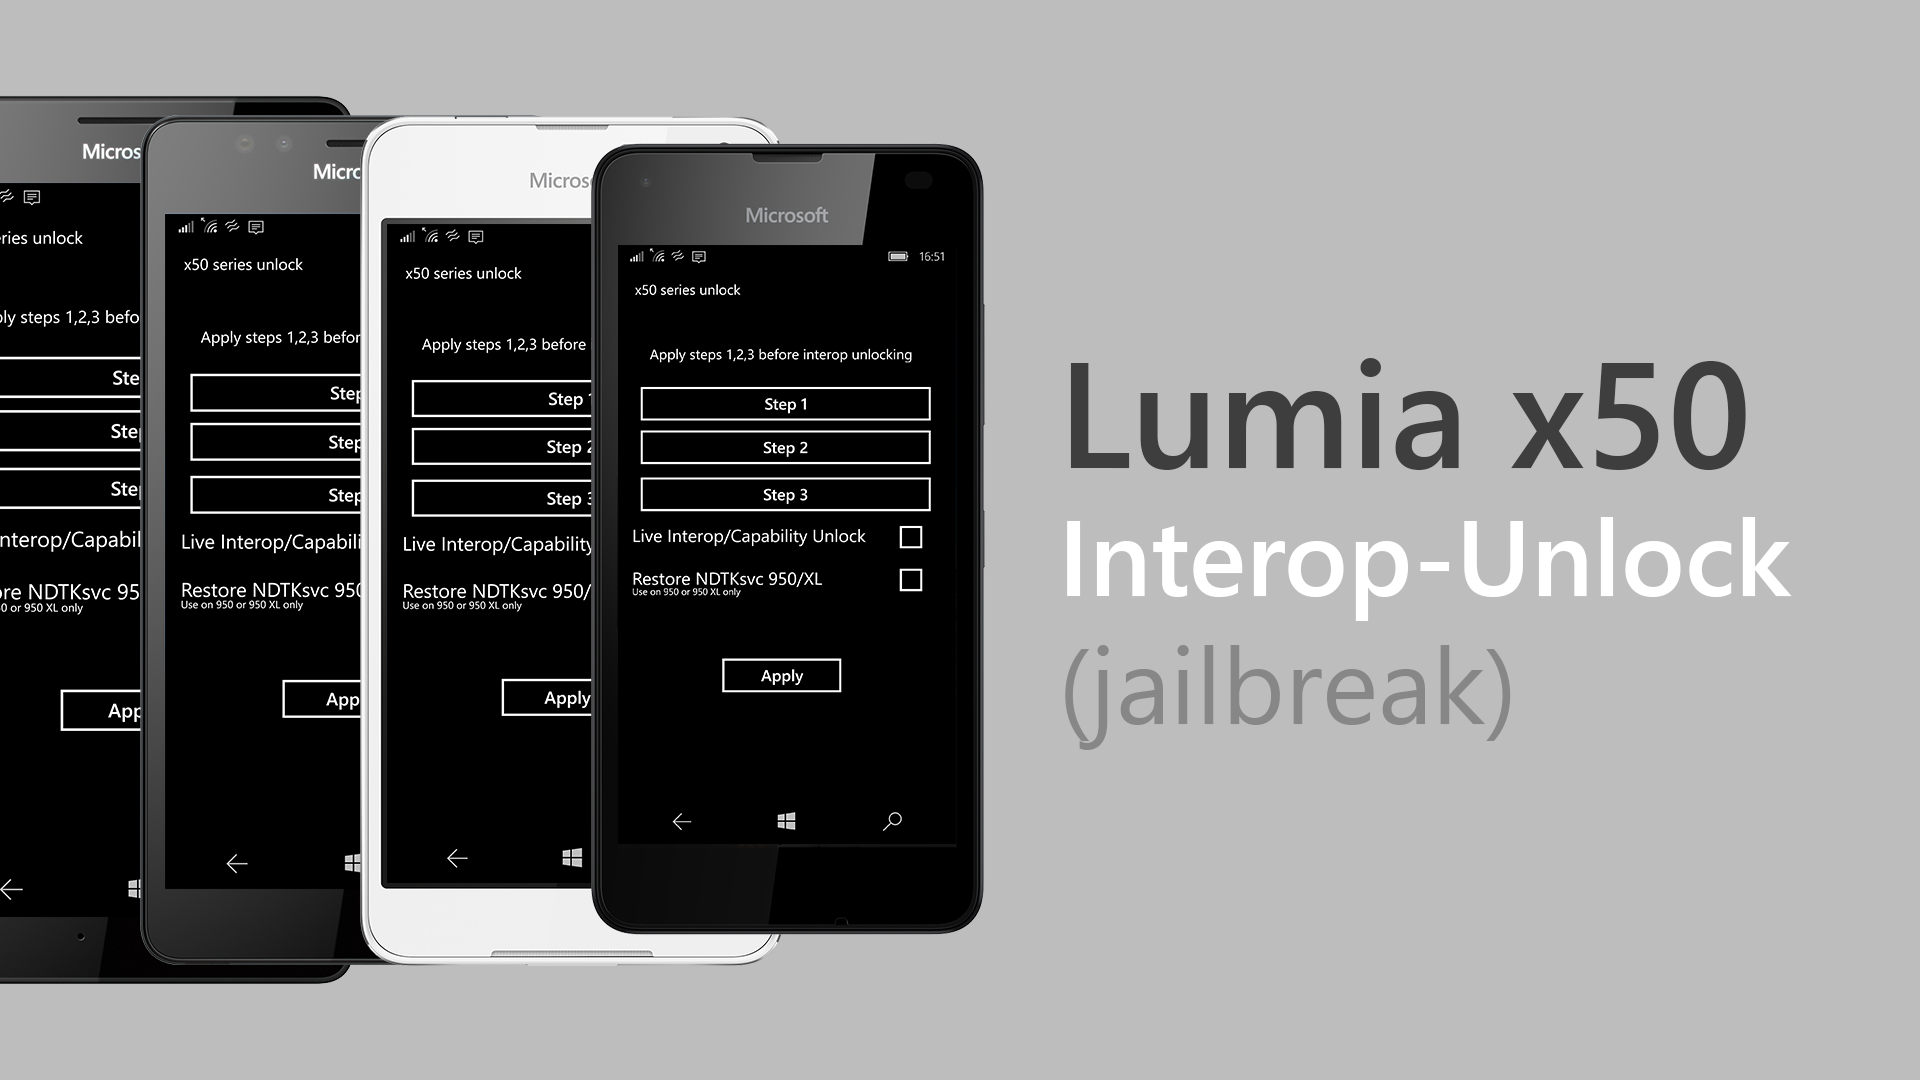 Interop-Unlock Lumia x50